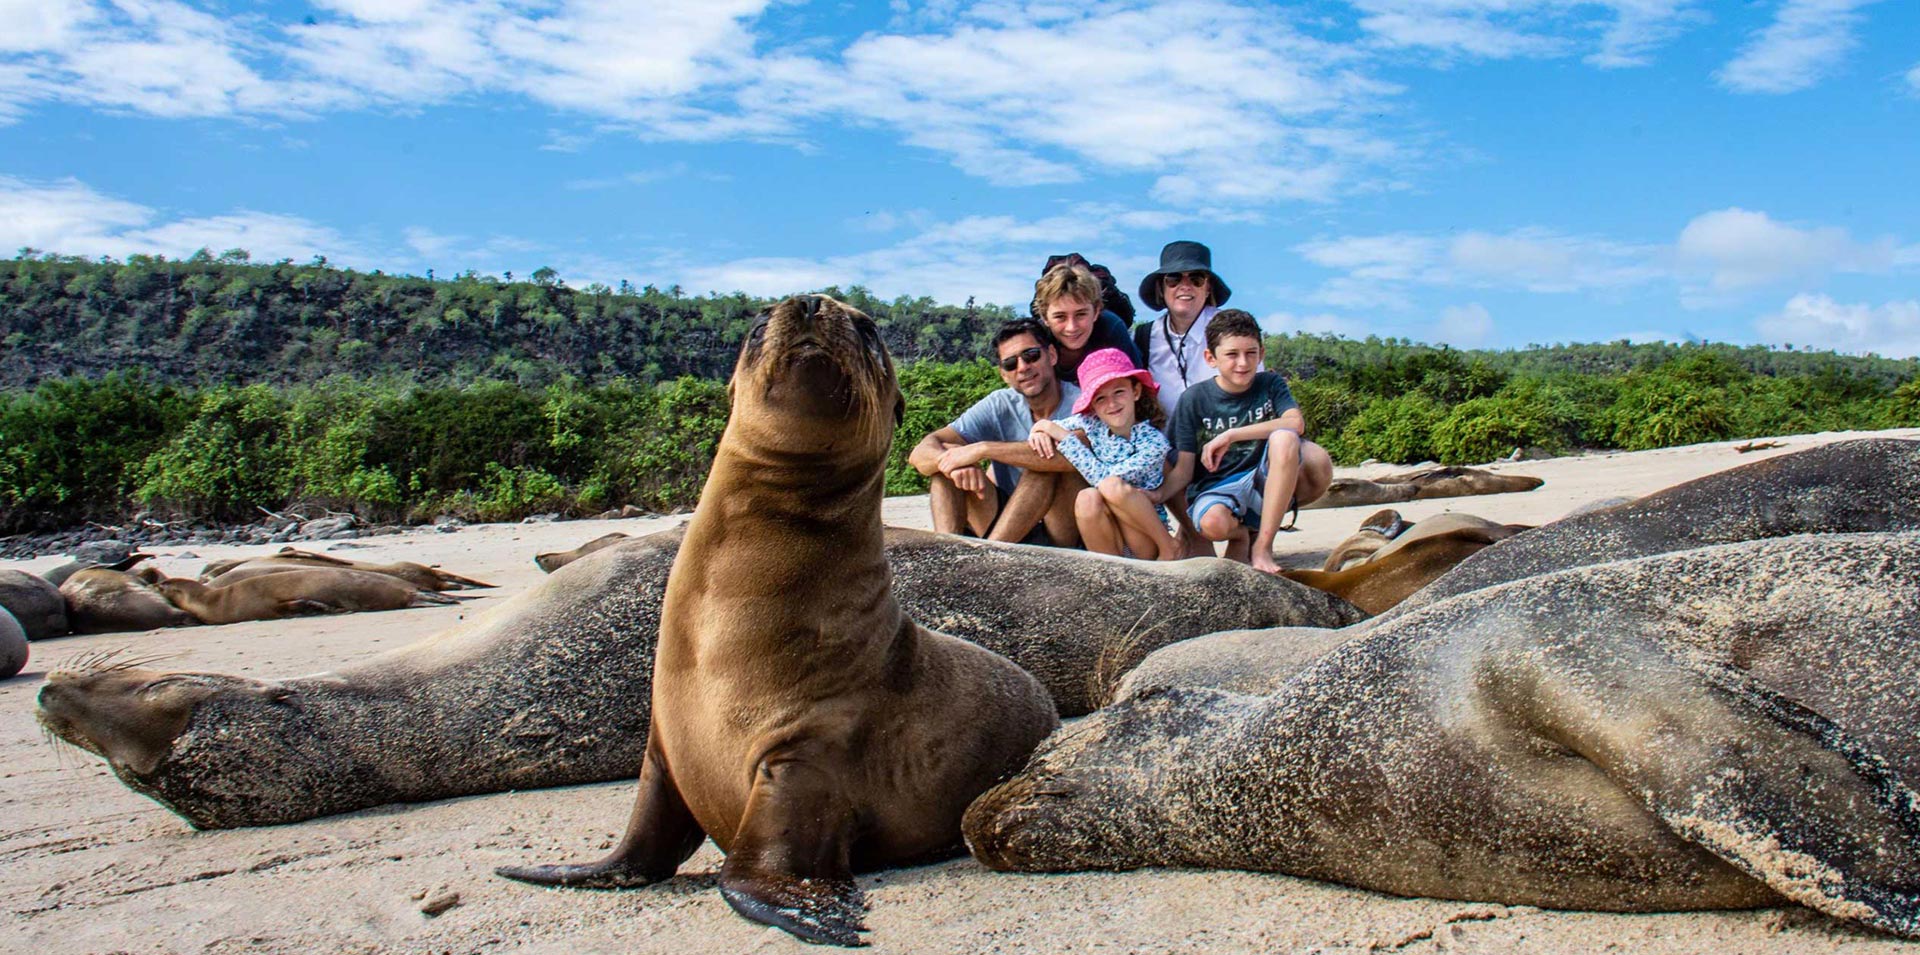 Family enjoying their tour in the Galapagos Islands